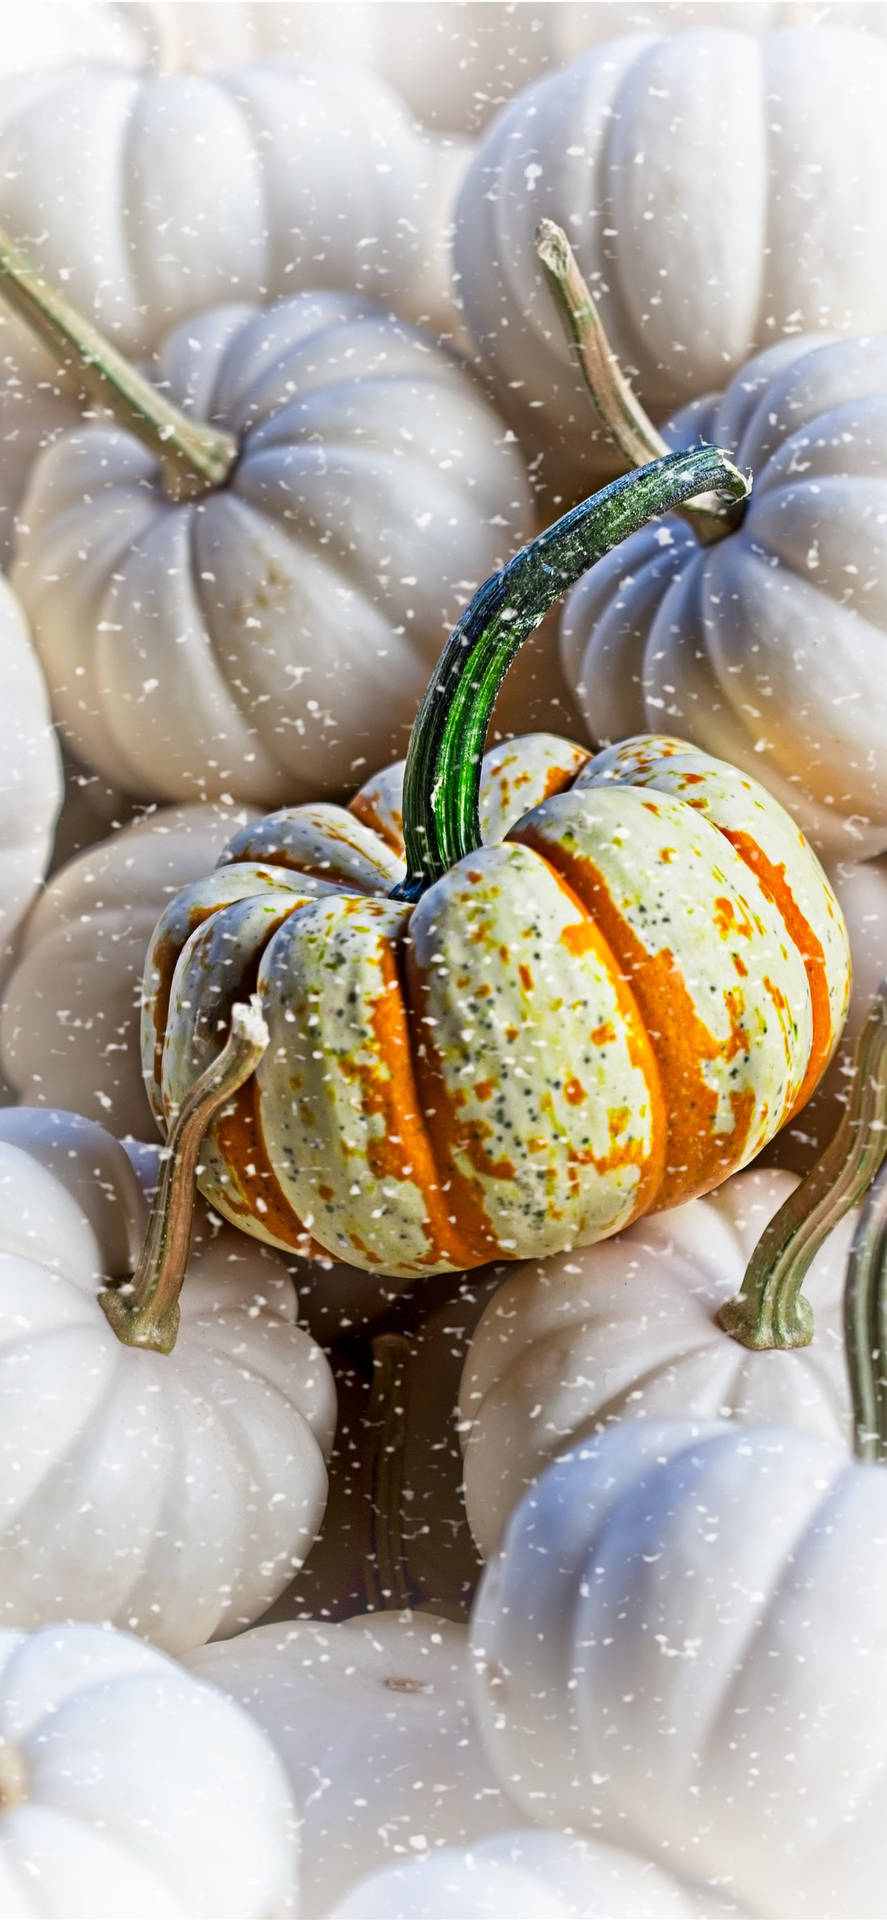 Download wallpaper 938x1668 pumpkin basket plaid autumn harvest iphone  876s6 for parallax hd background